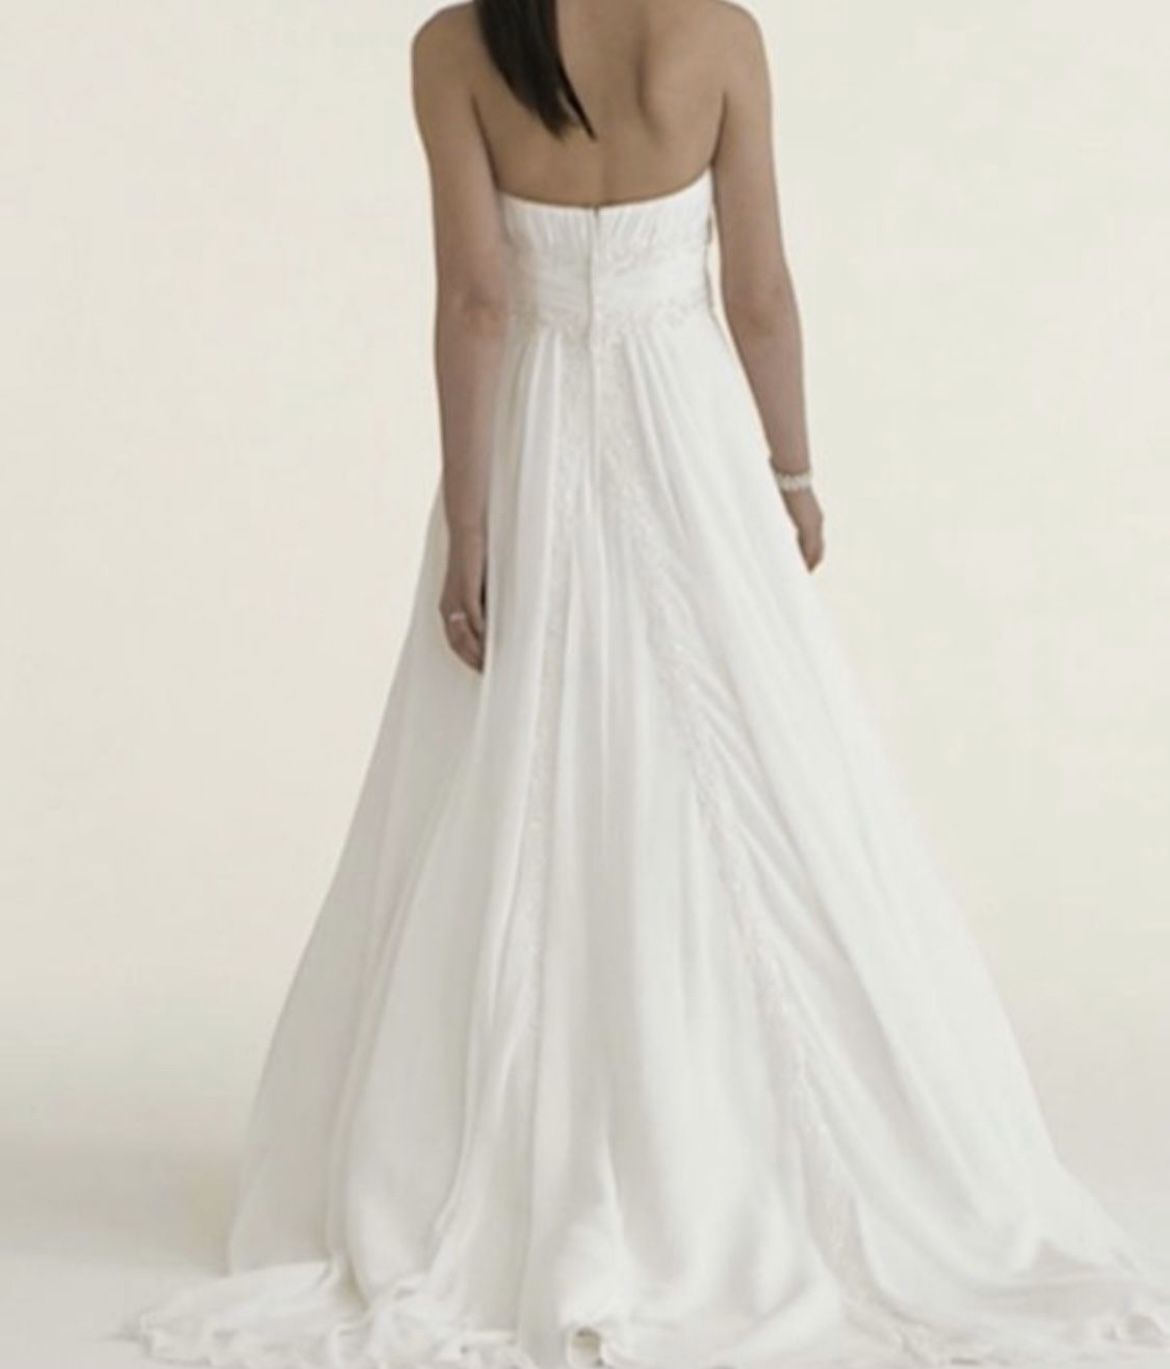 White Wedding Dress - Size 6